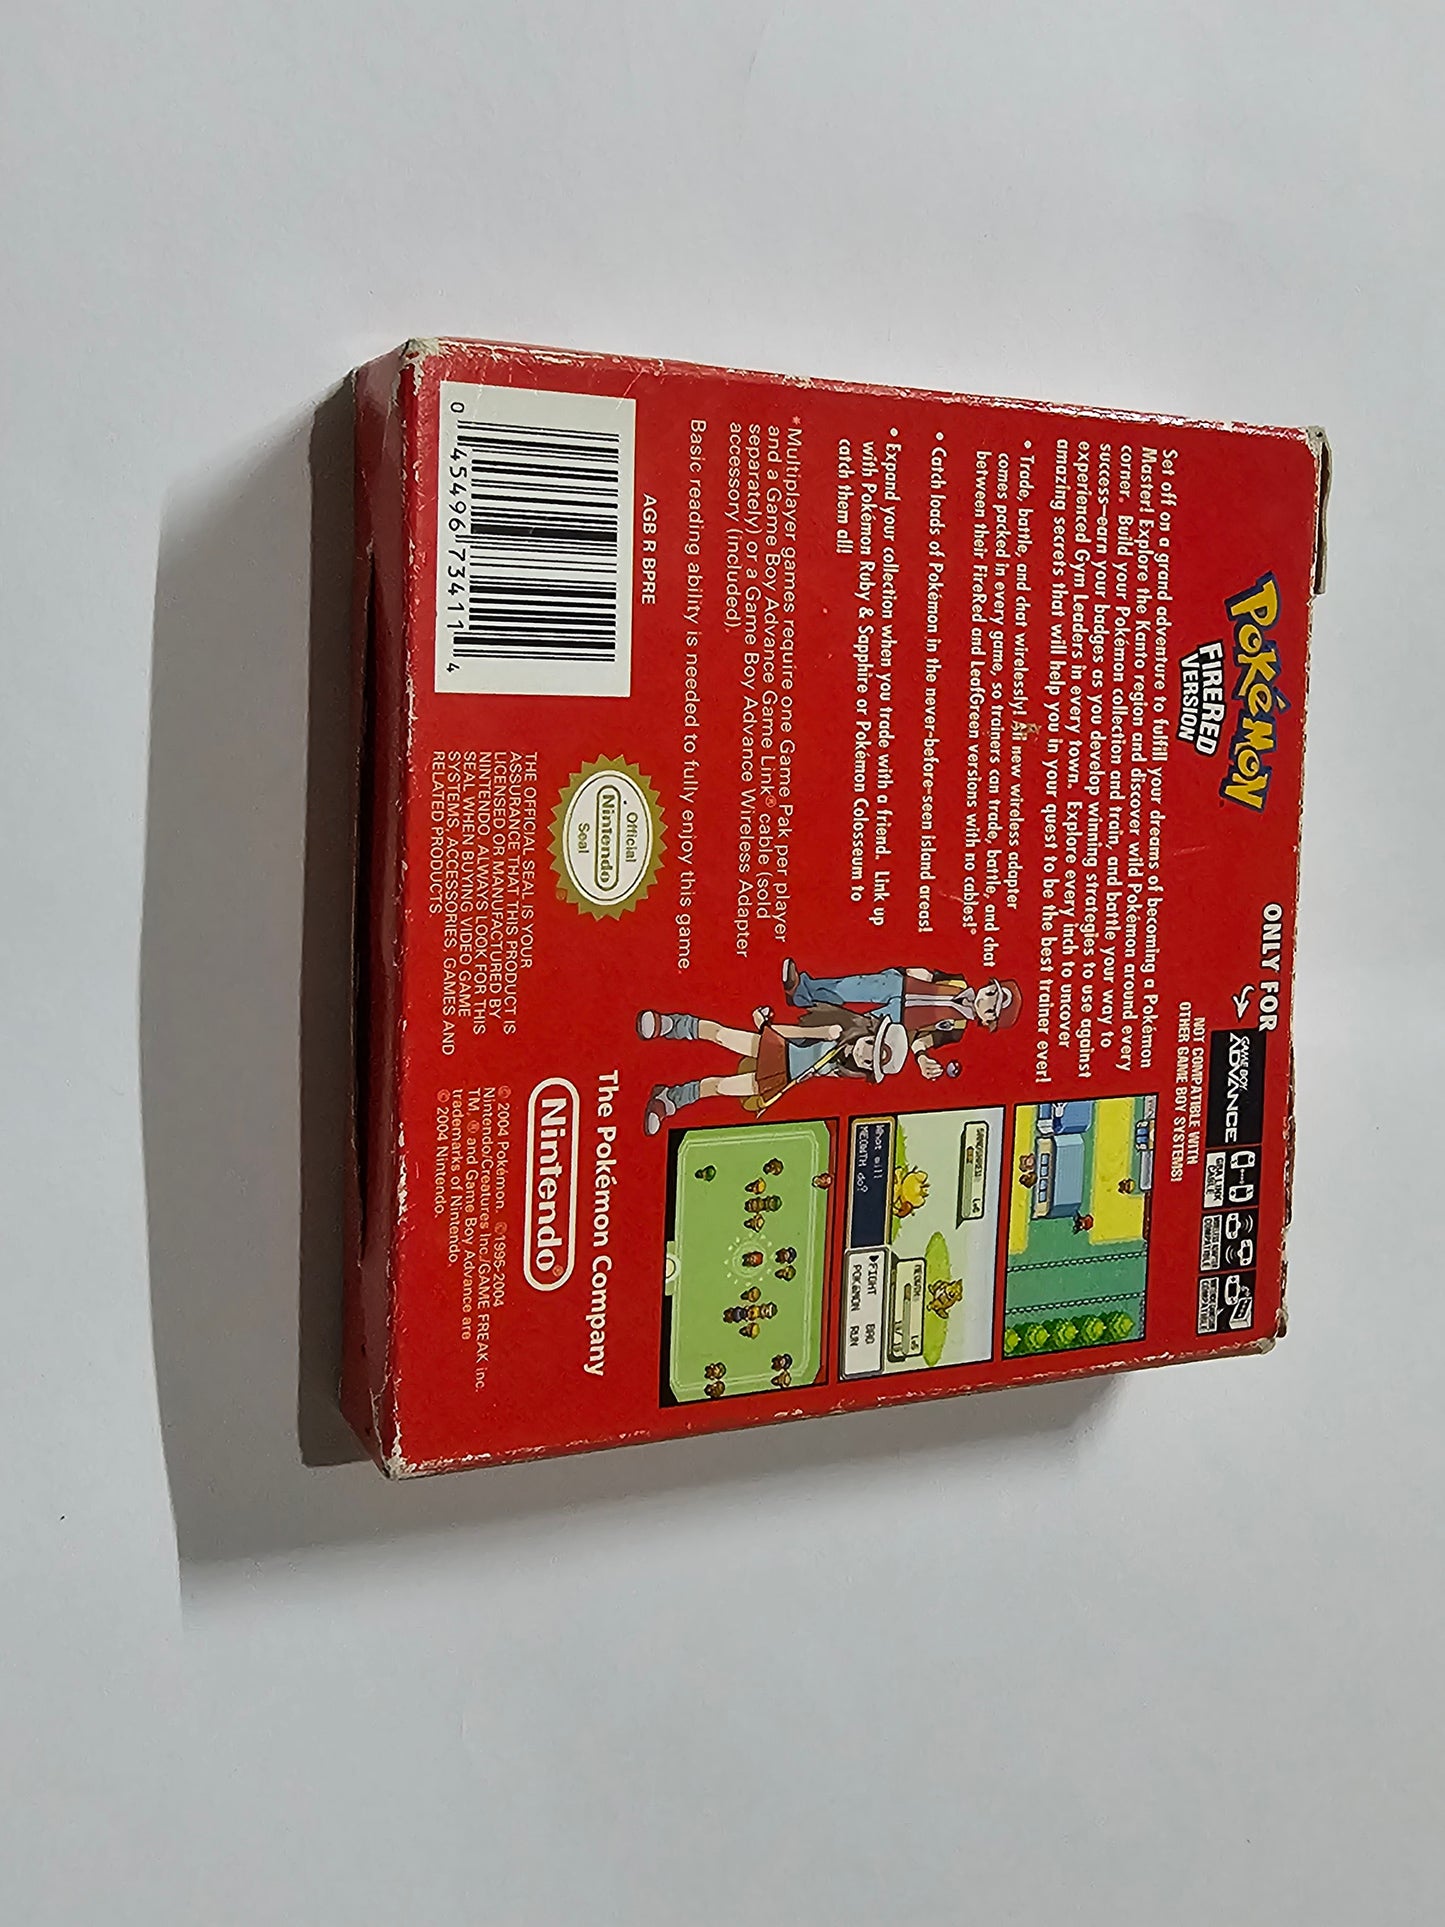 Pokemon FireRed Completo (CiB) Nintendo Game Boy Advance